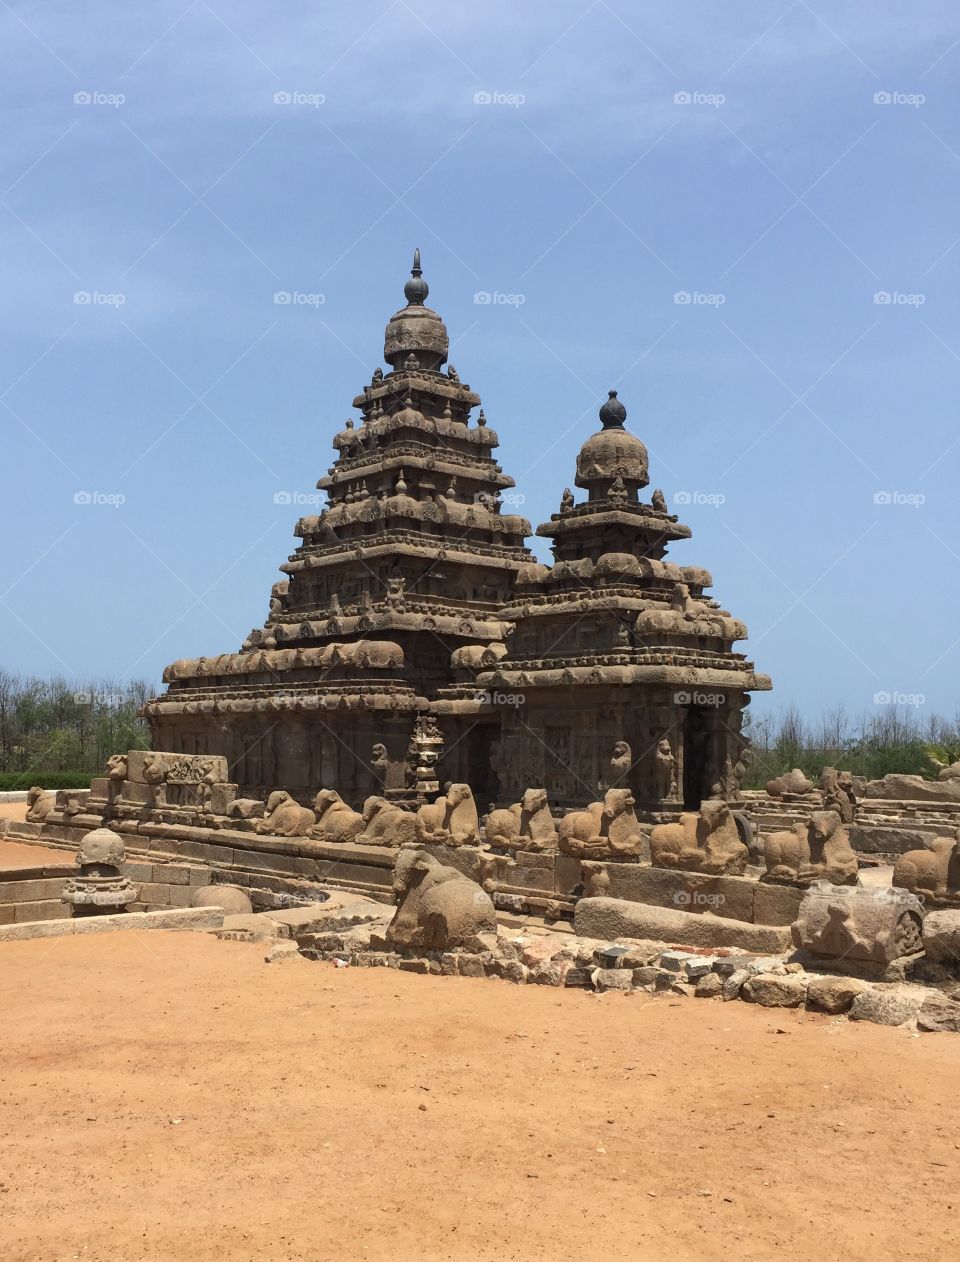 Mahabalipuram Temples, Chennai